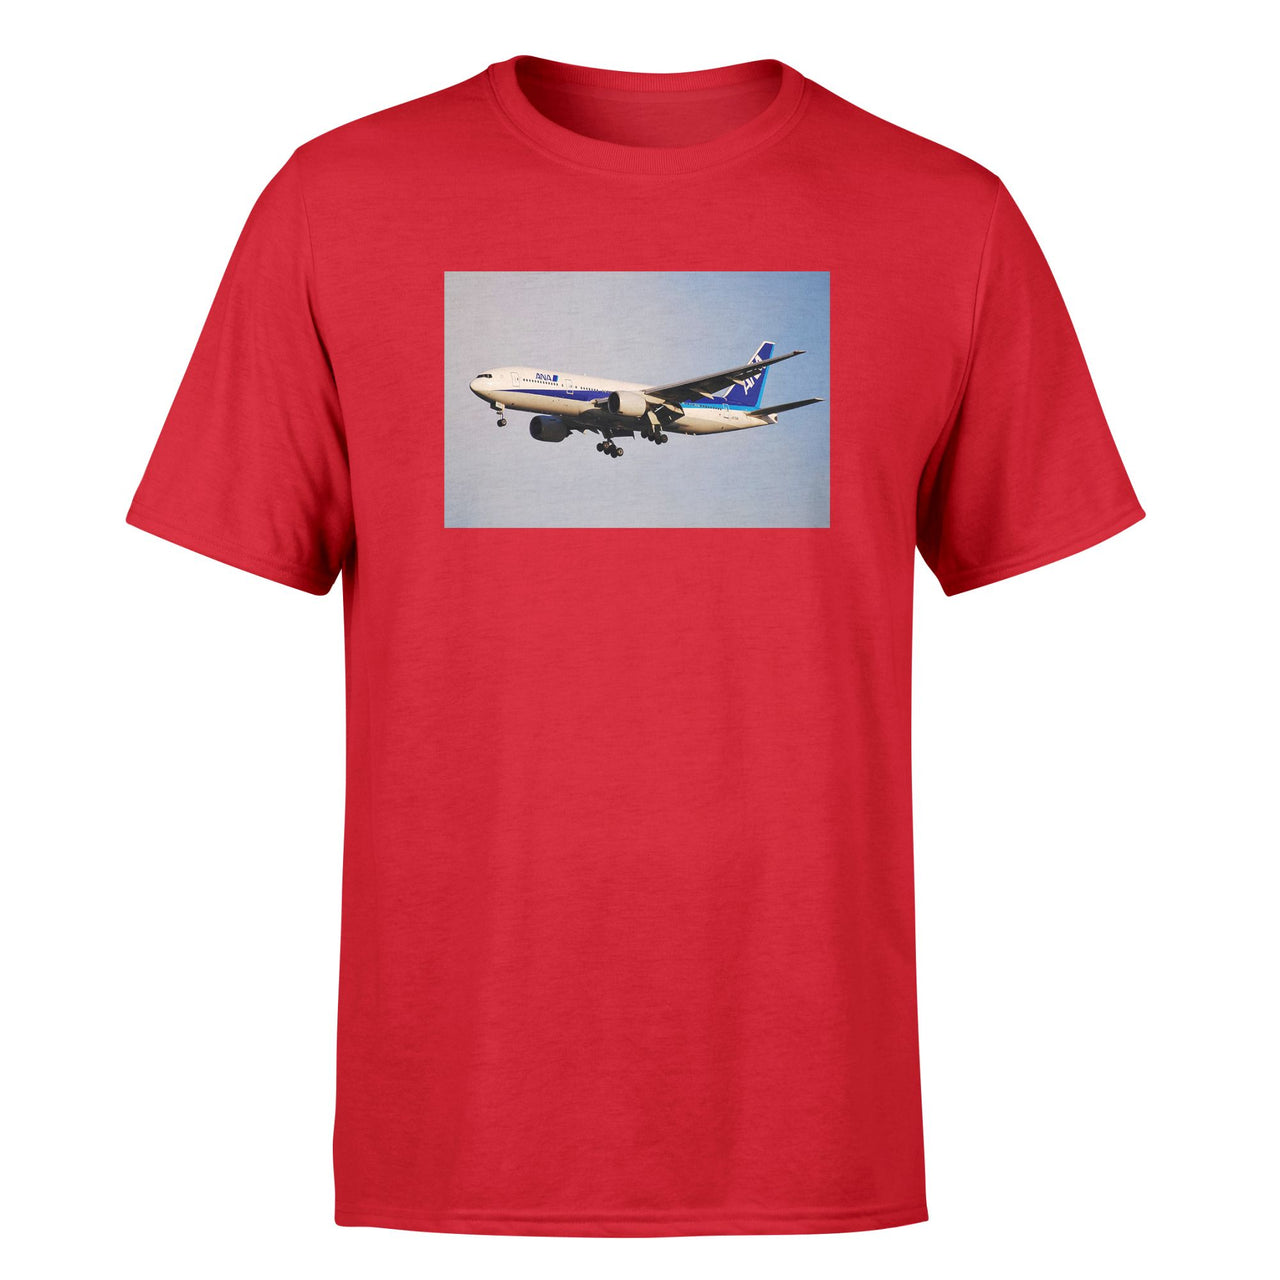 ANA's Boeing 777 Designed T-Shirts